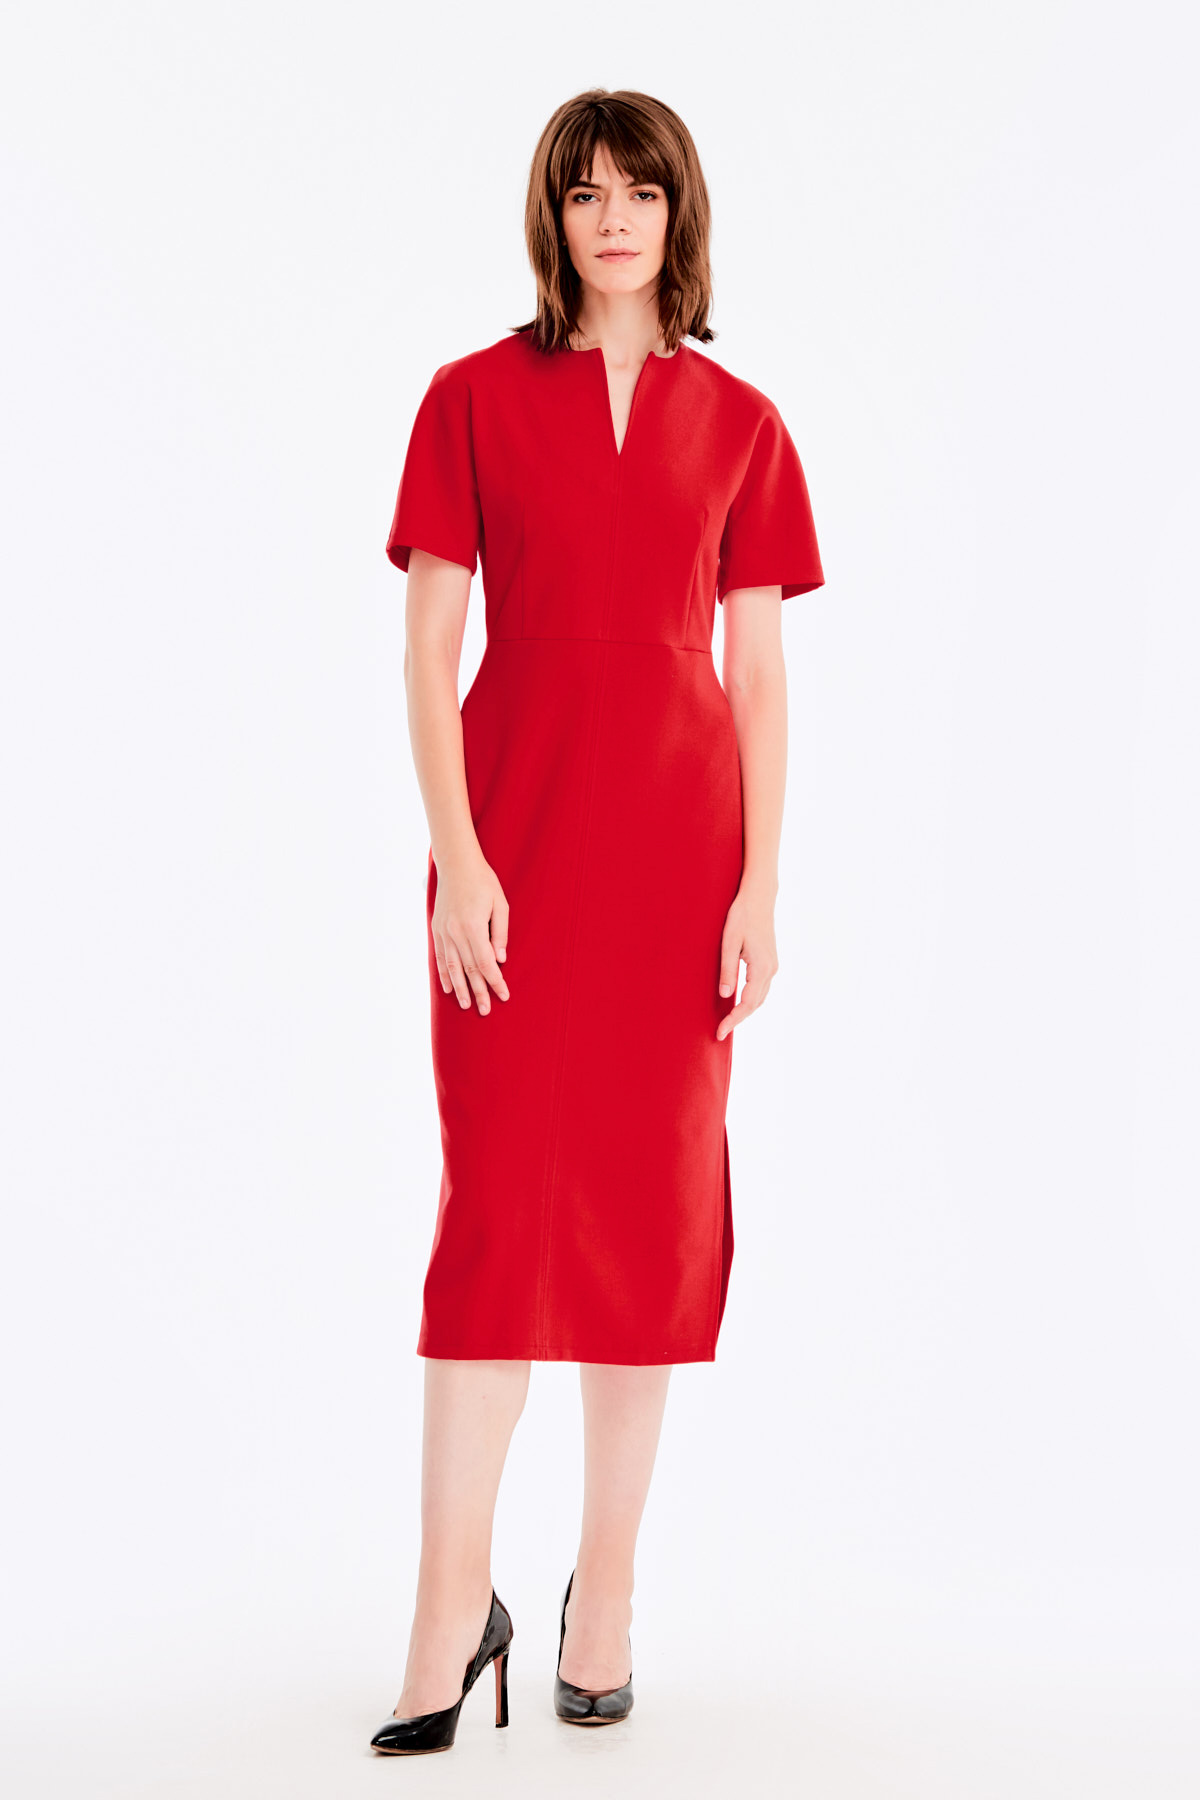 V-neck red dress with slits  , photo 3